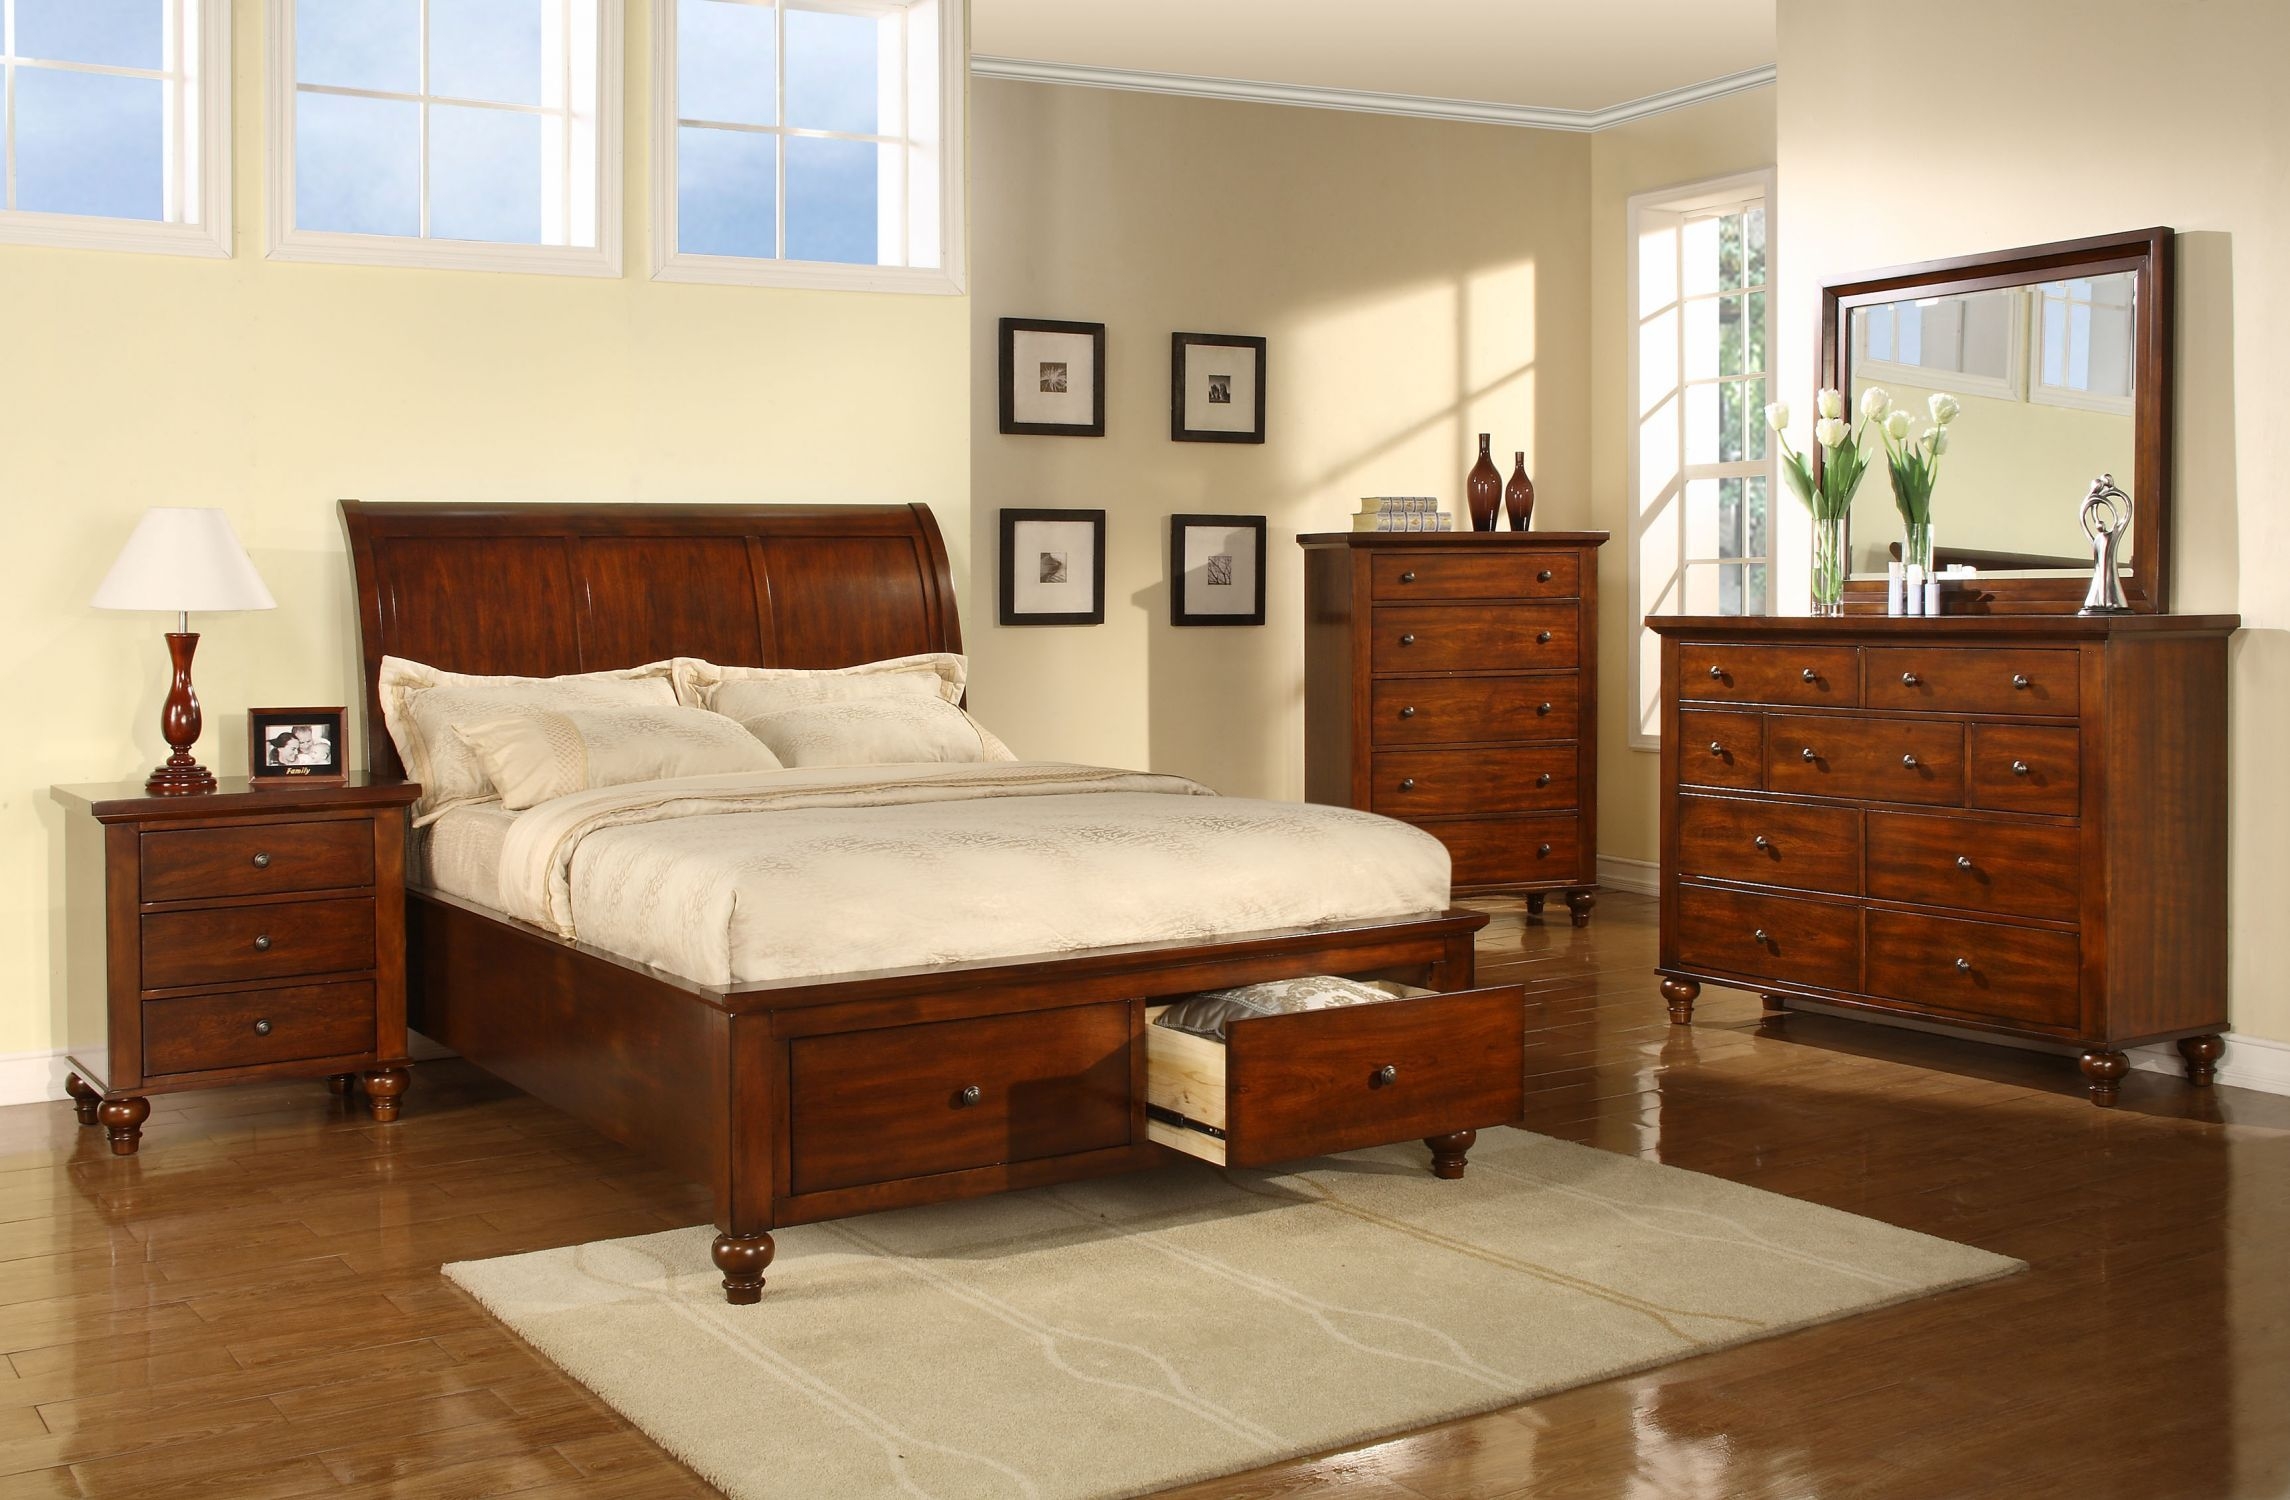 g328 rosewood bedroom furniture